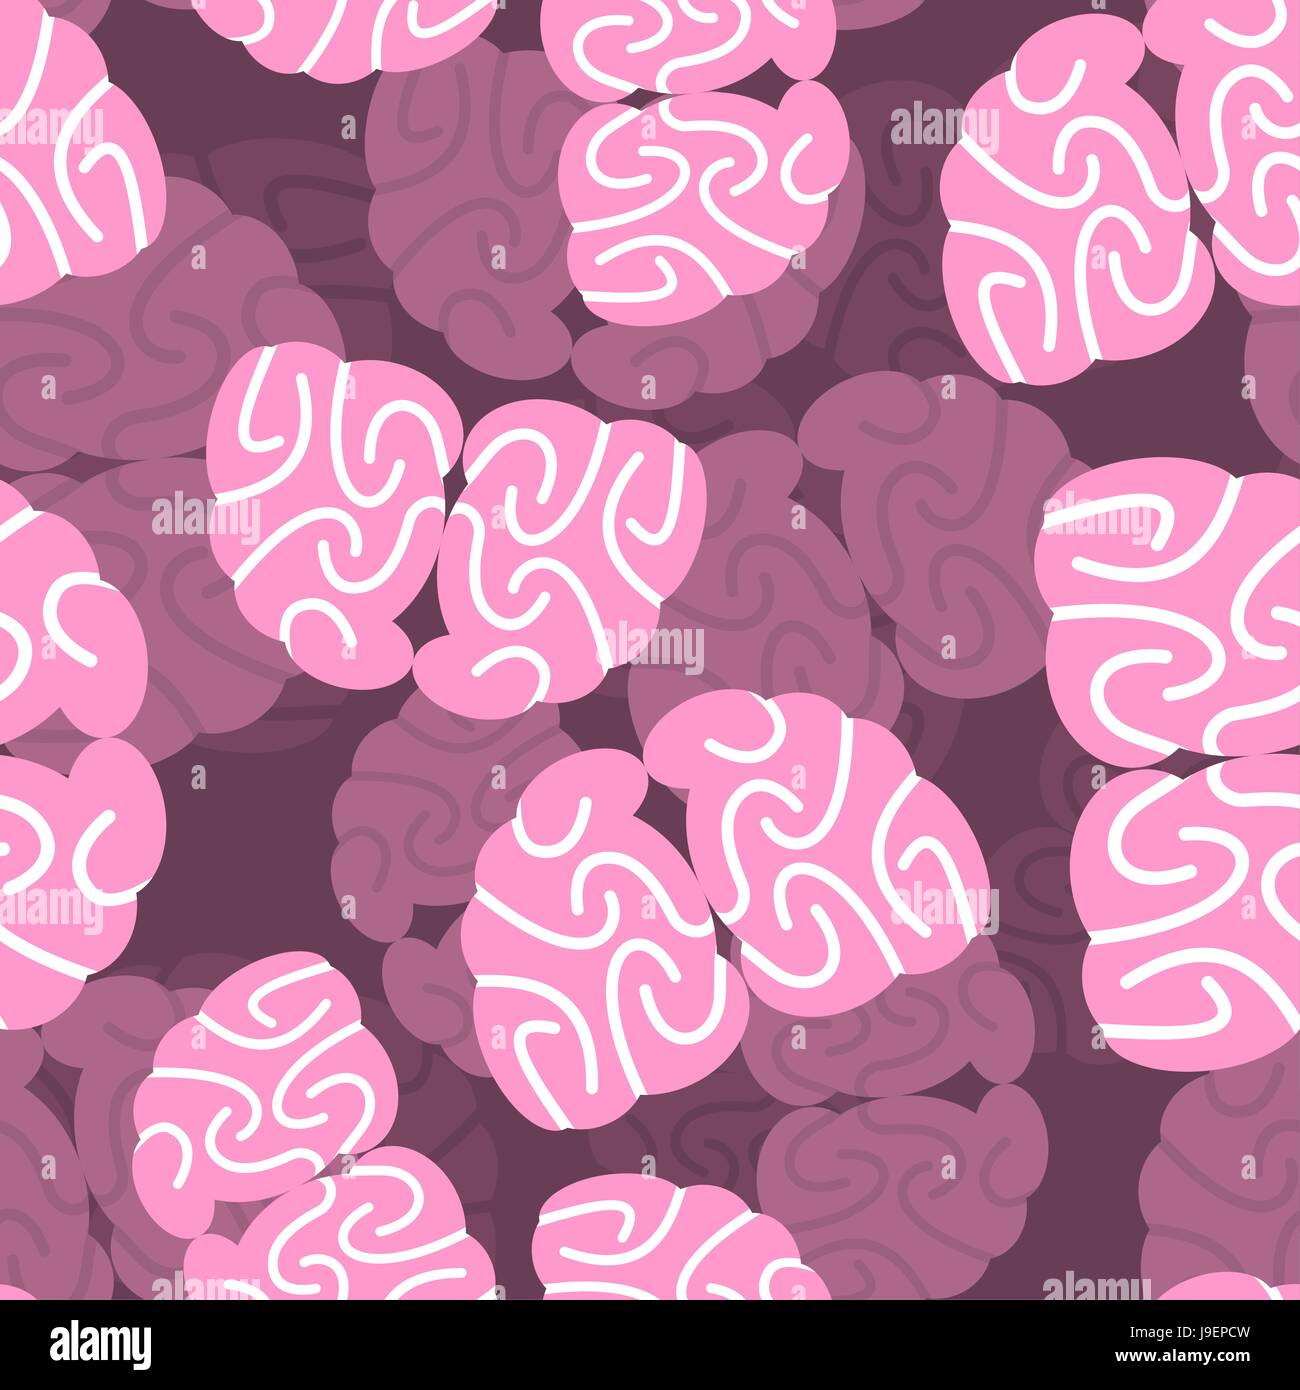 Brain 3d background. Human Brain seamless pattern. Frisky brain tester. Human brains is repeating ornament. Stock Vector